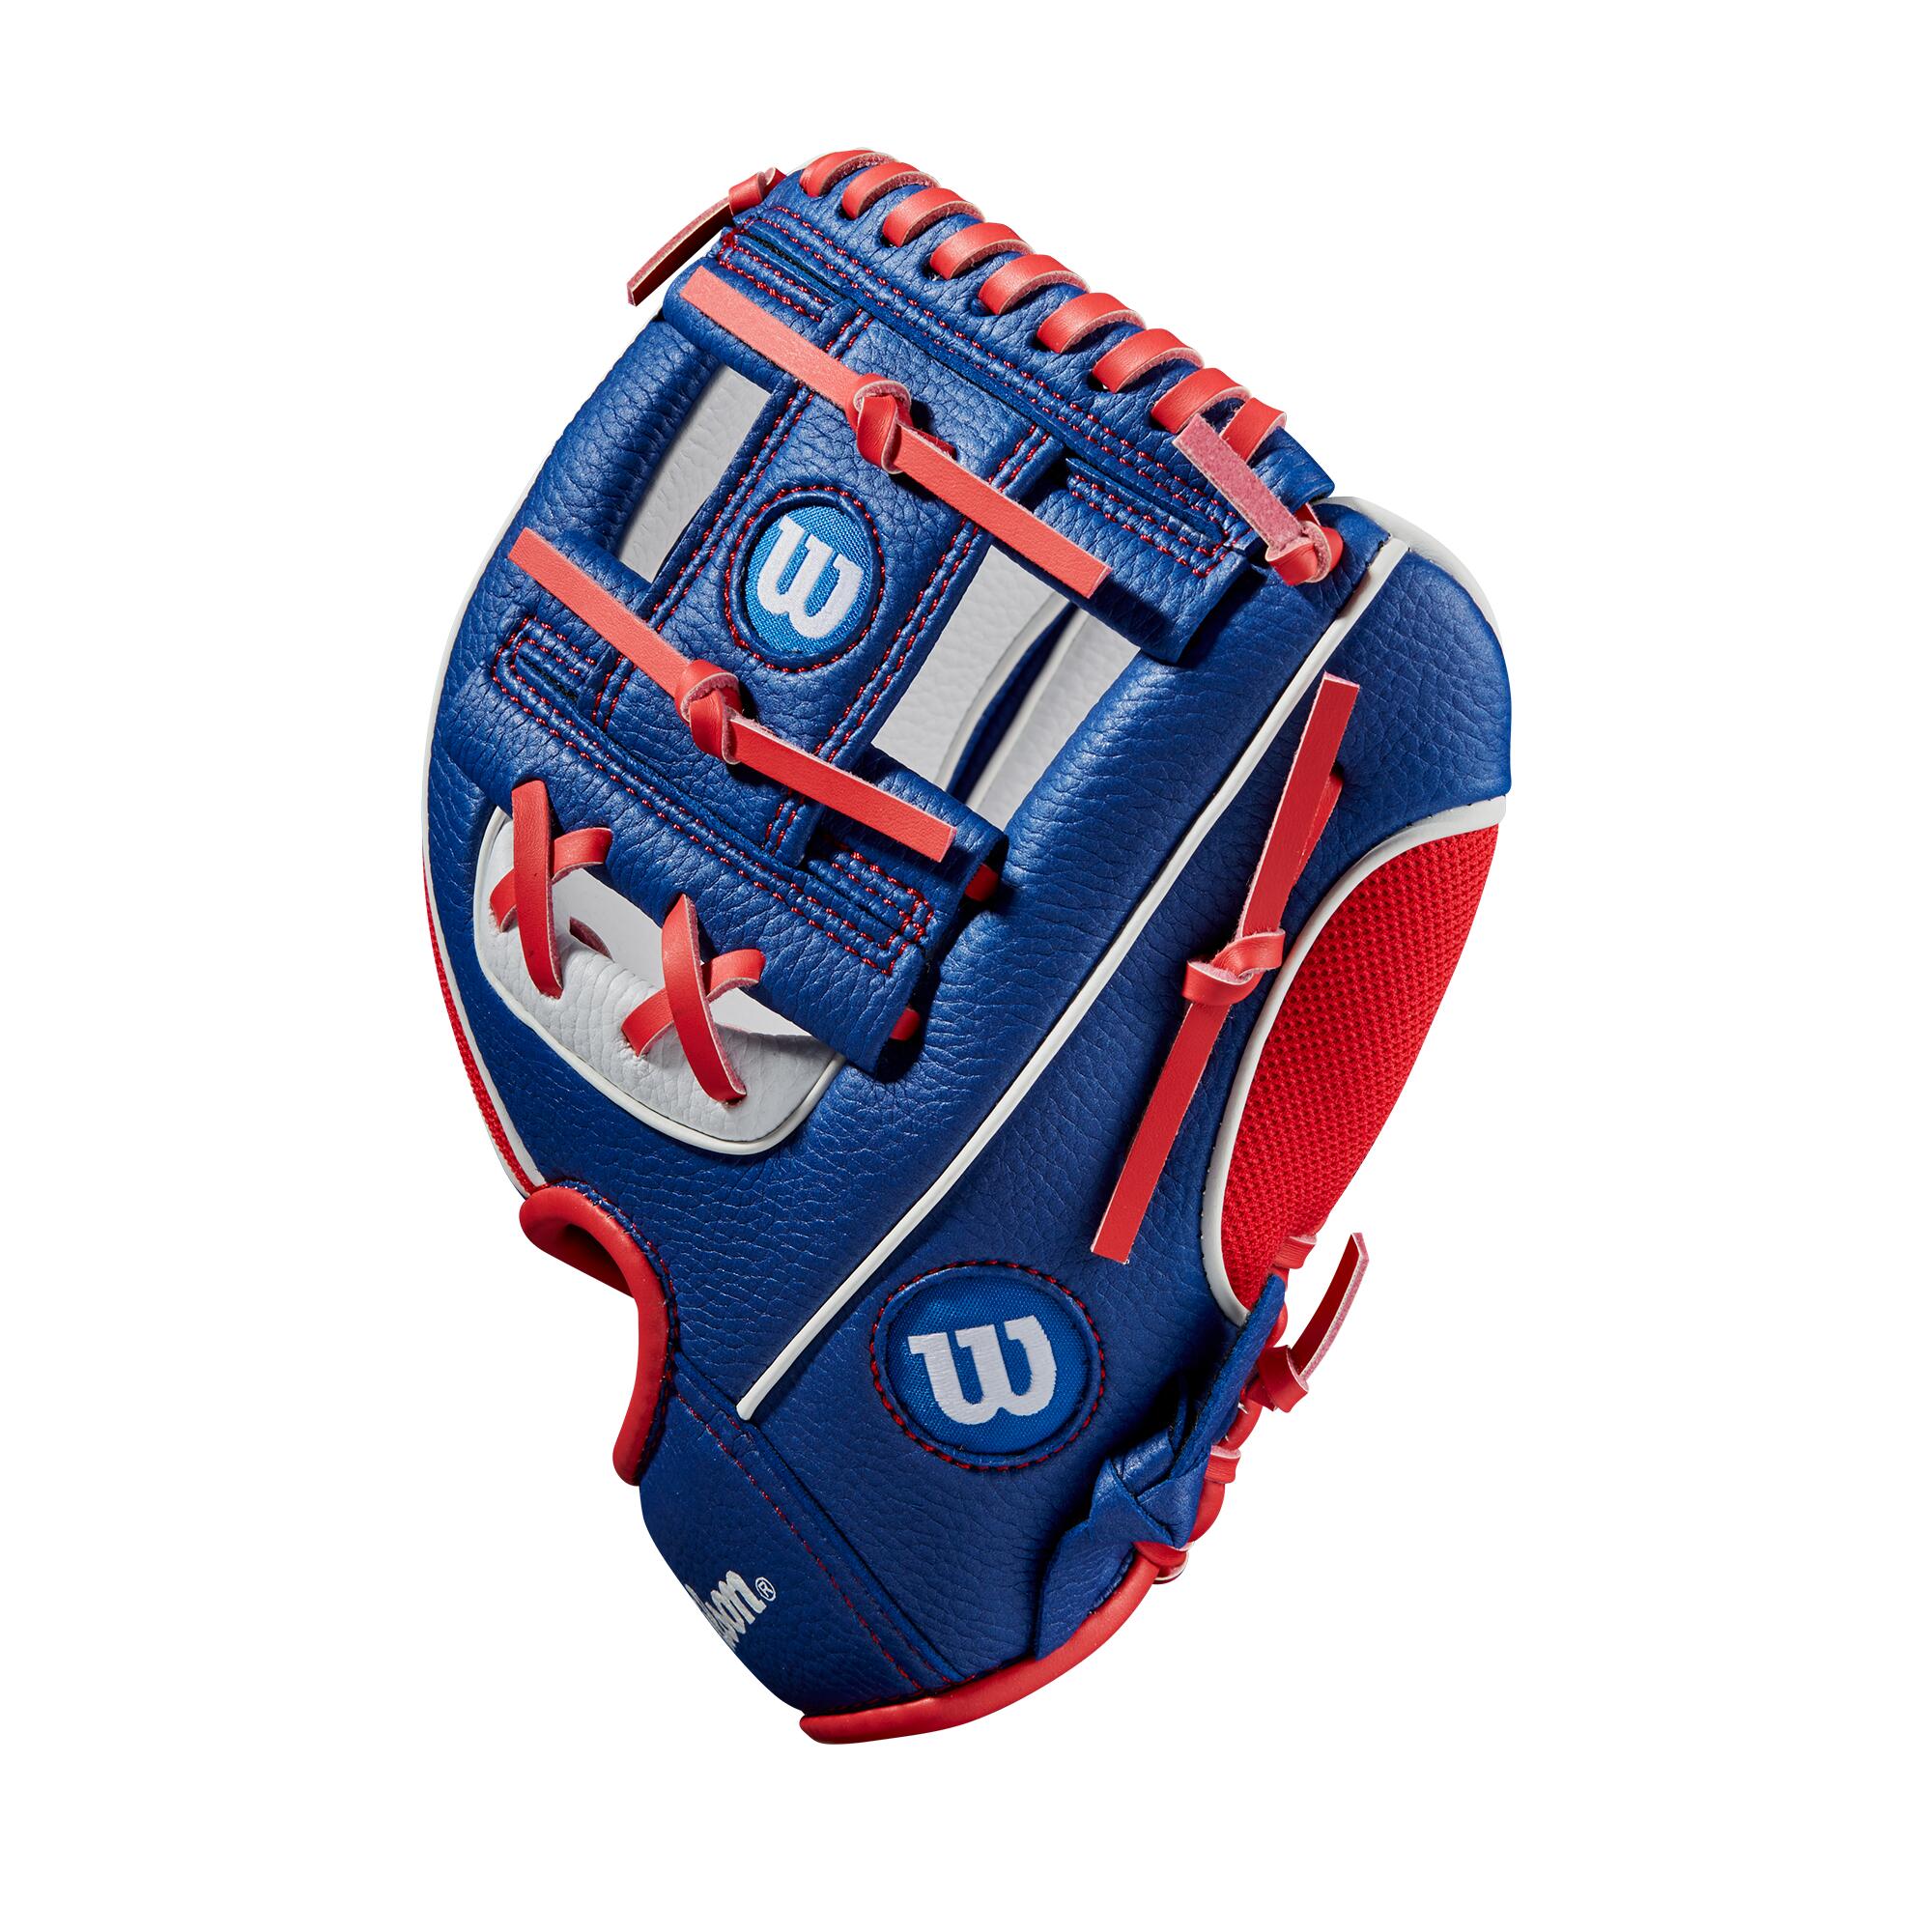 Wilson A200 Junior 10in Baseball Glove - Ry / Rd / Wh 4/5